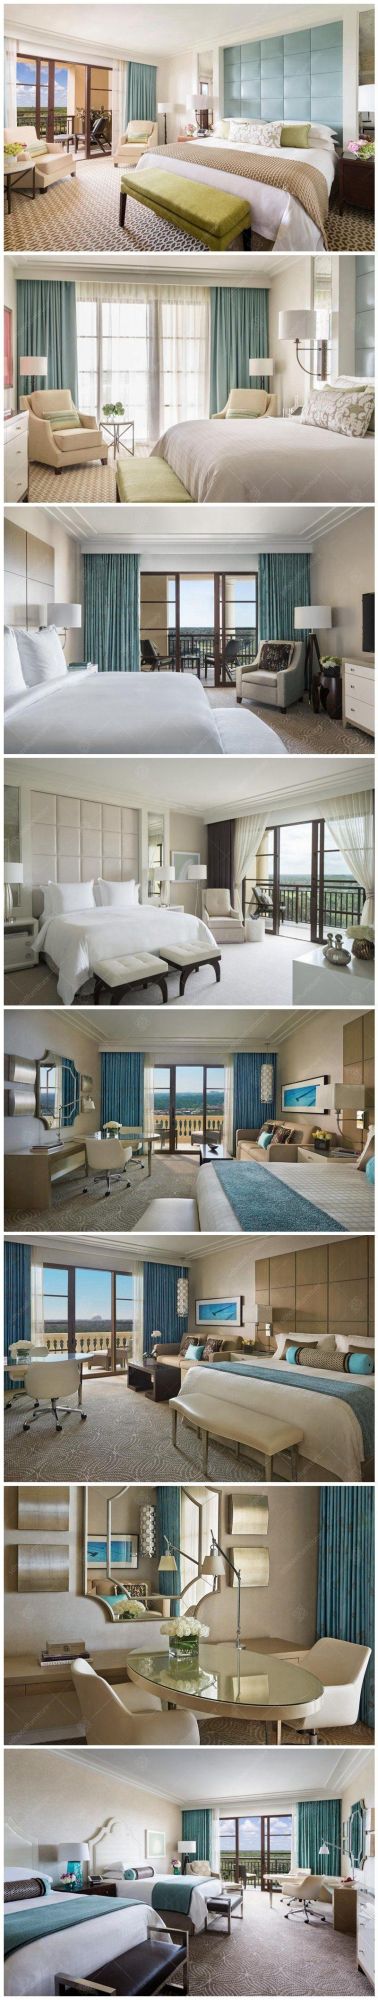 Elegant 5 Star Hotel Bedroom Furniture Commercial Luxury Hotel Room Furniture